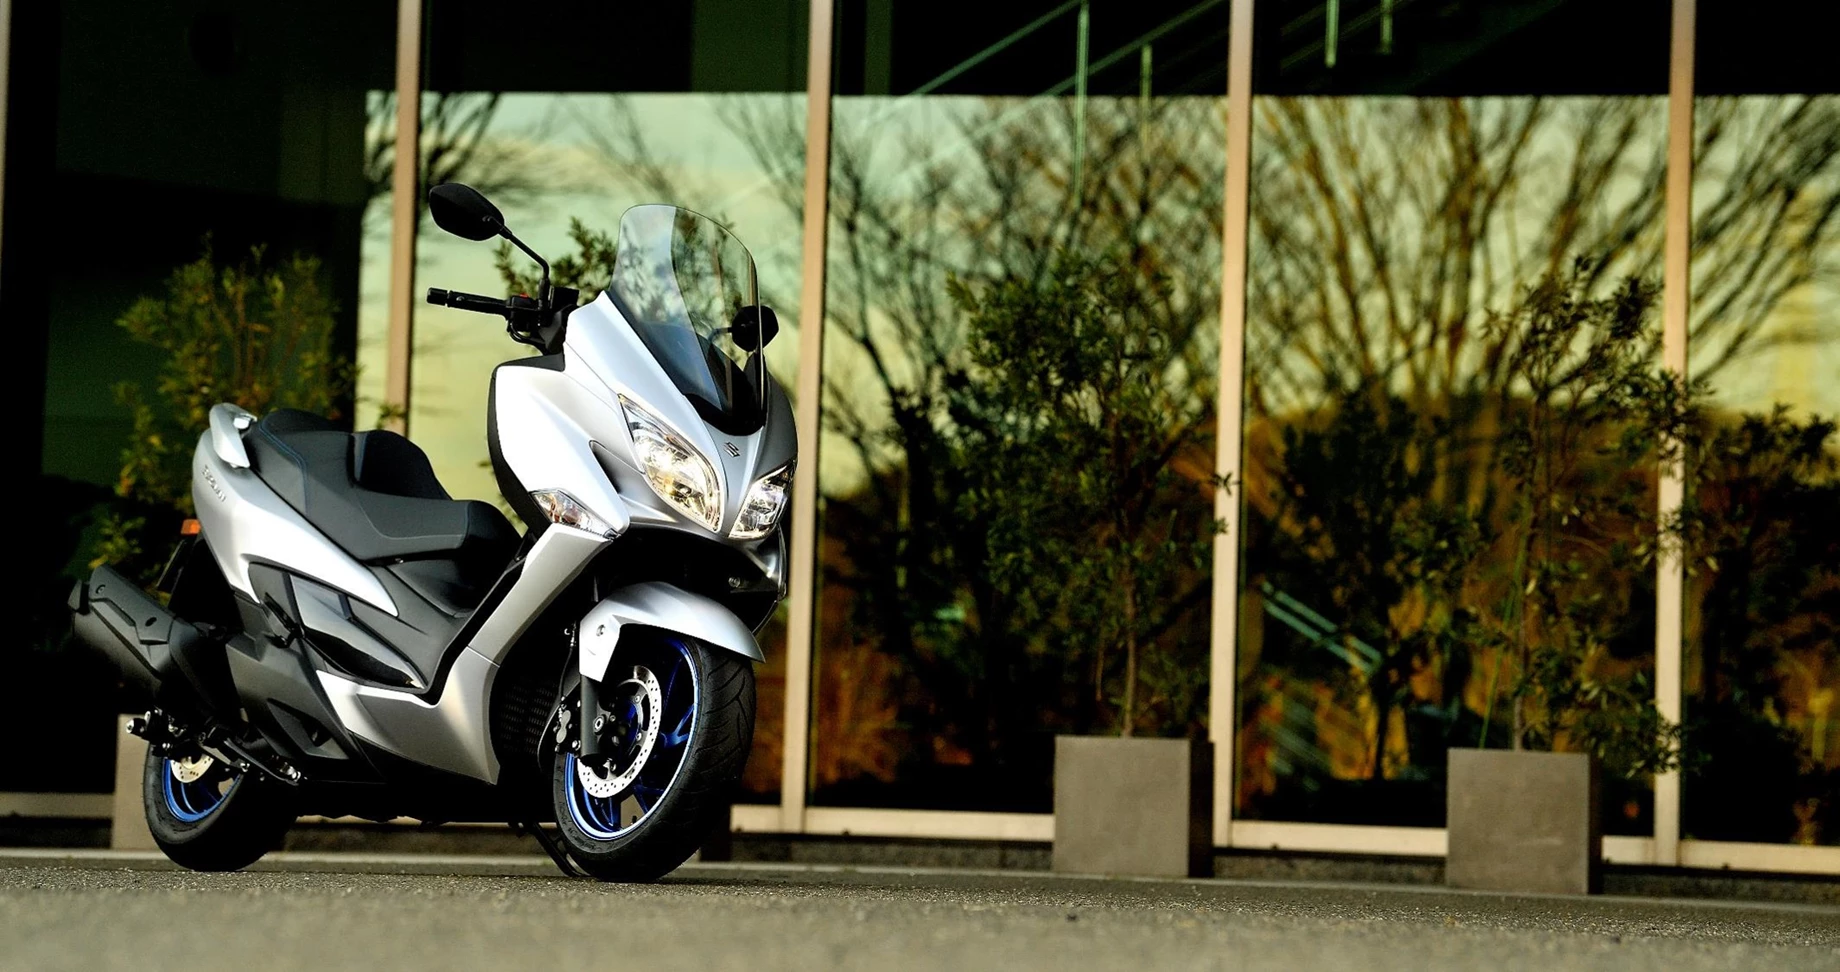 Suzuki Scooter riding through urban environment